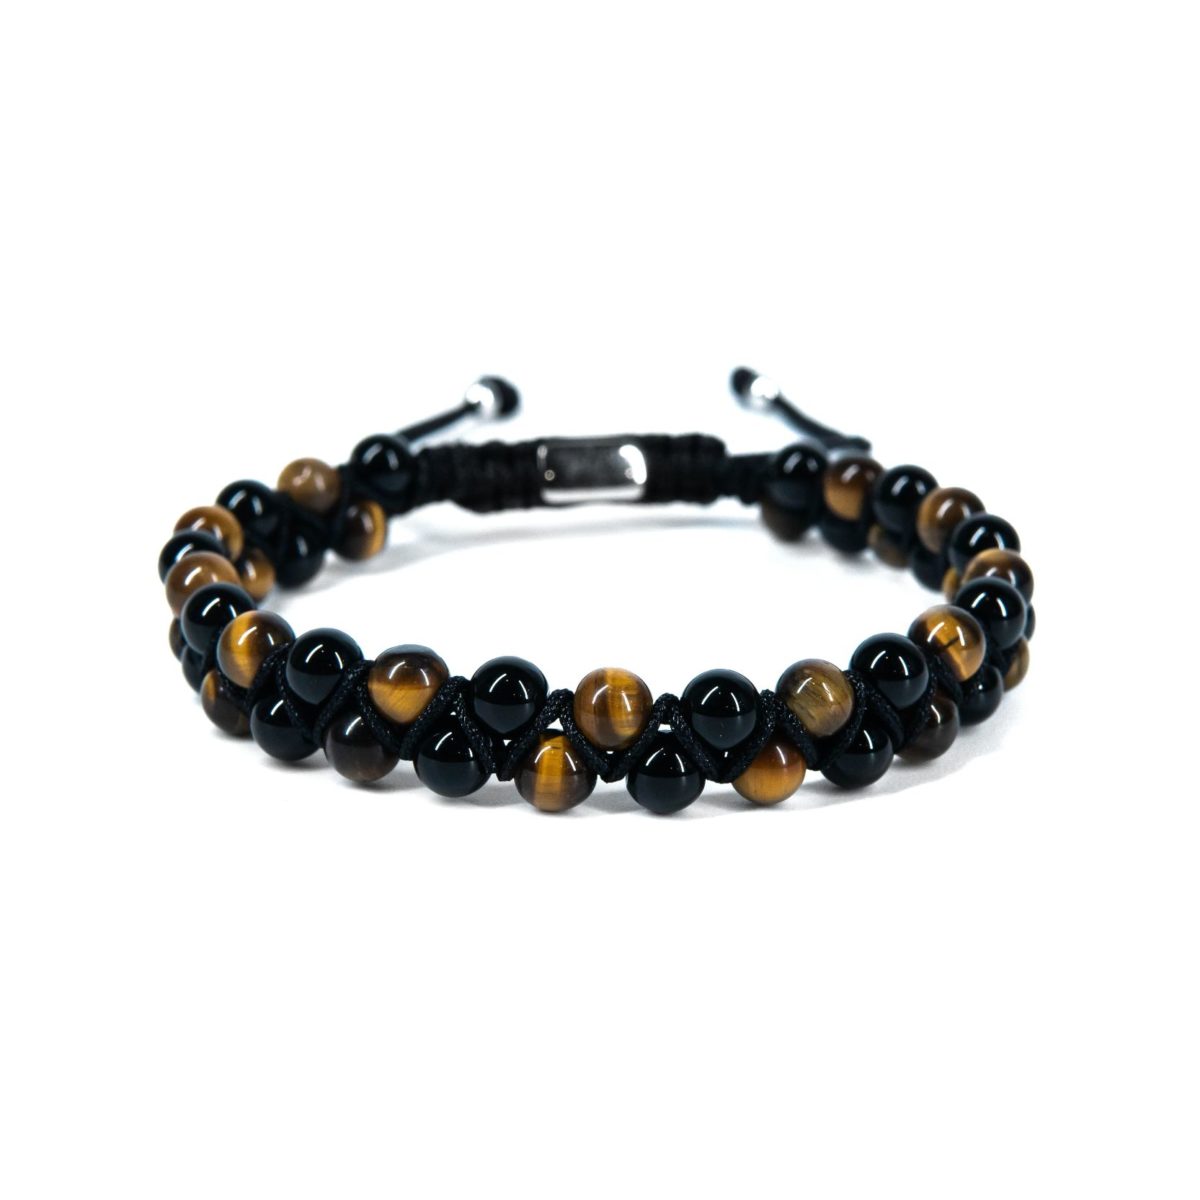 https://m.clubbella.co/product/edmund-tiger-eyes-black-onyx-bracelet/ Edmund Tiger Eyes Black Onyx bracelet (2)